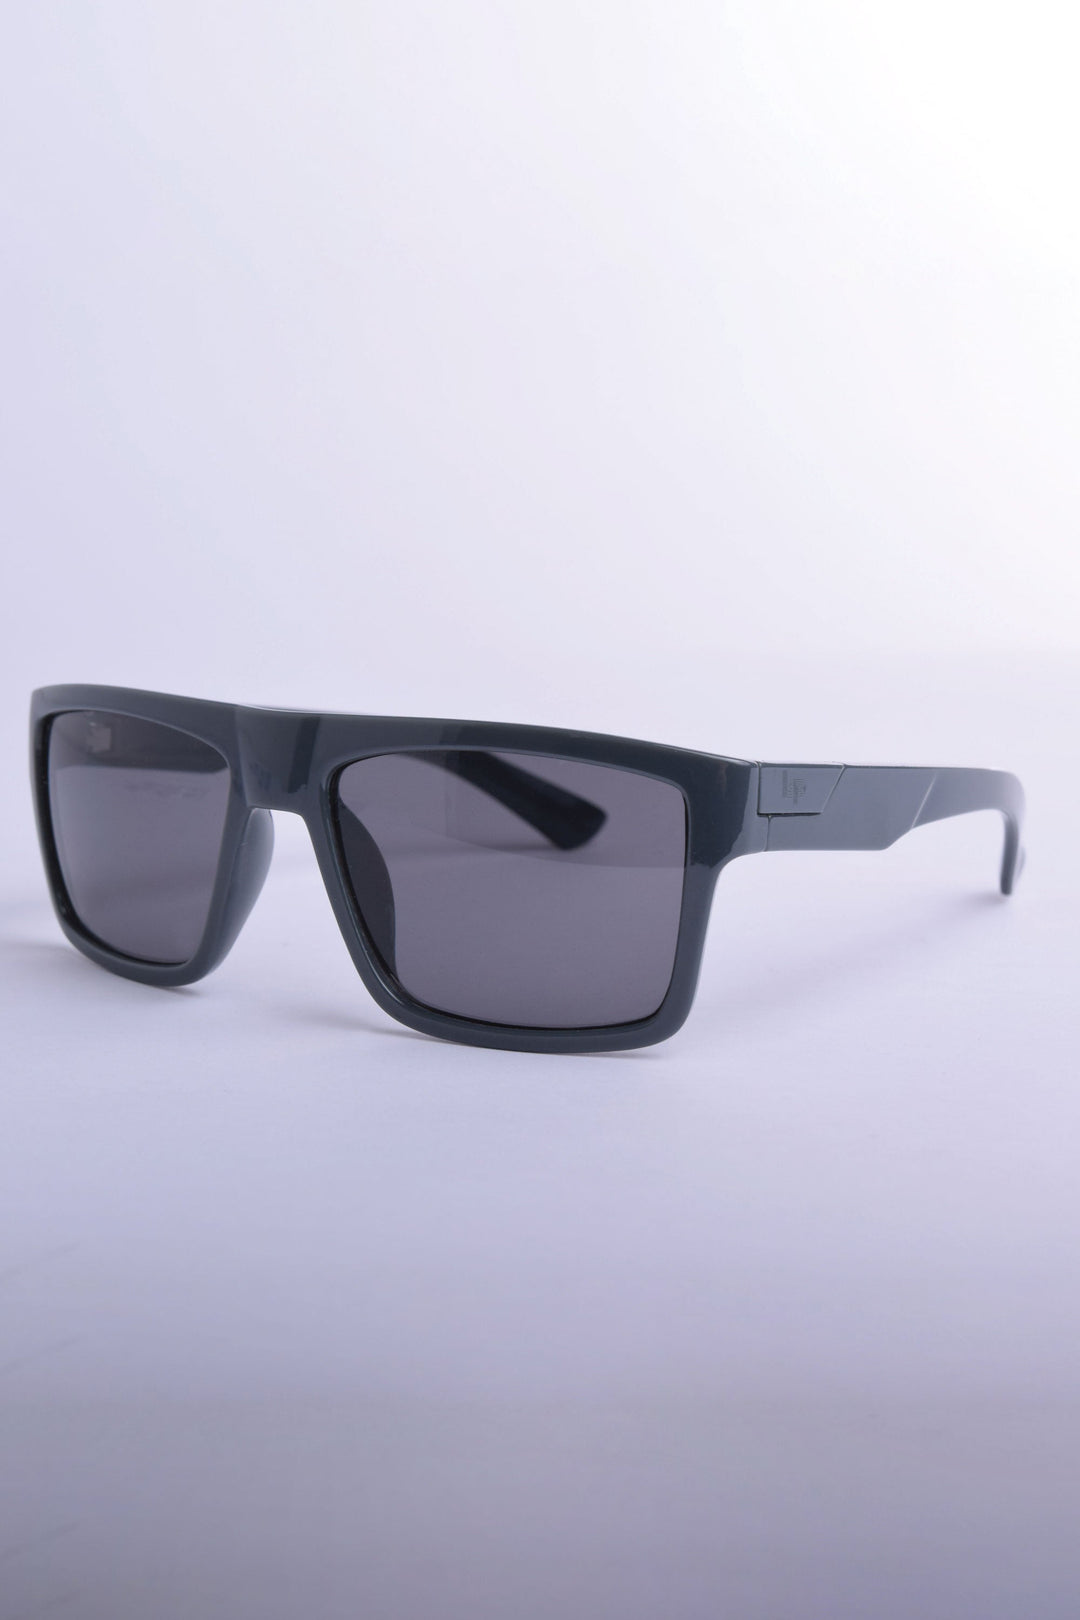 Sunglasses with polarized lenses [Phoenix]